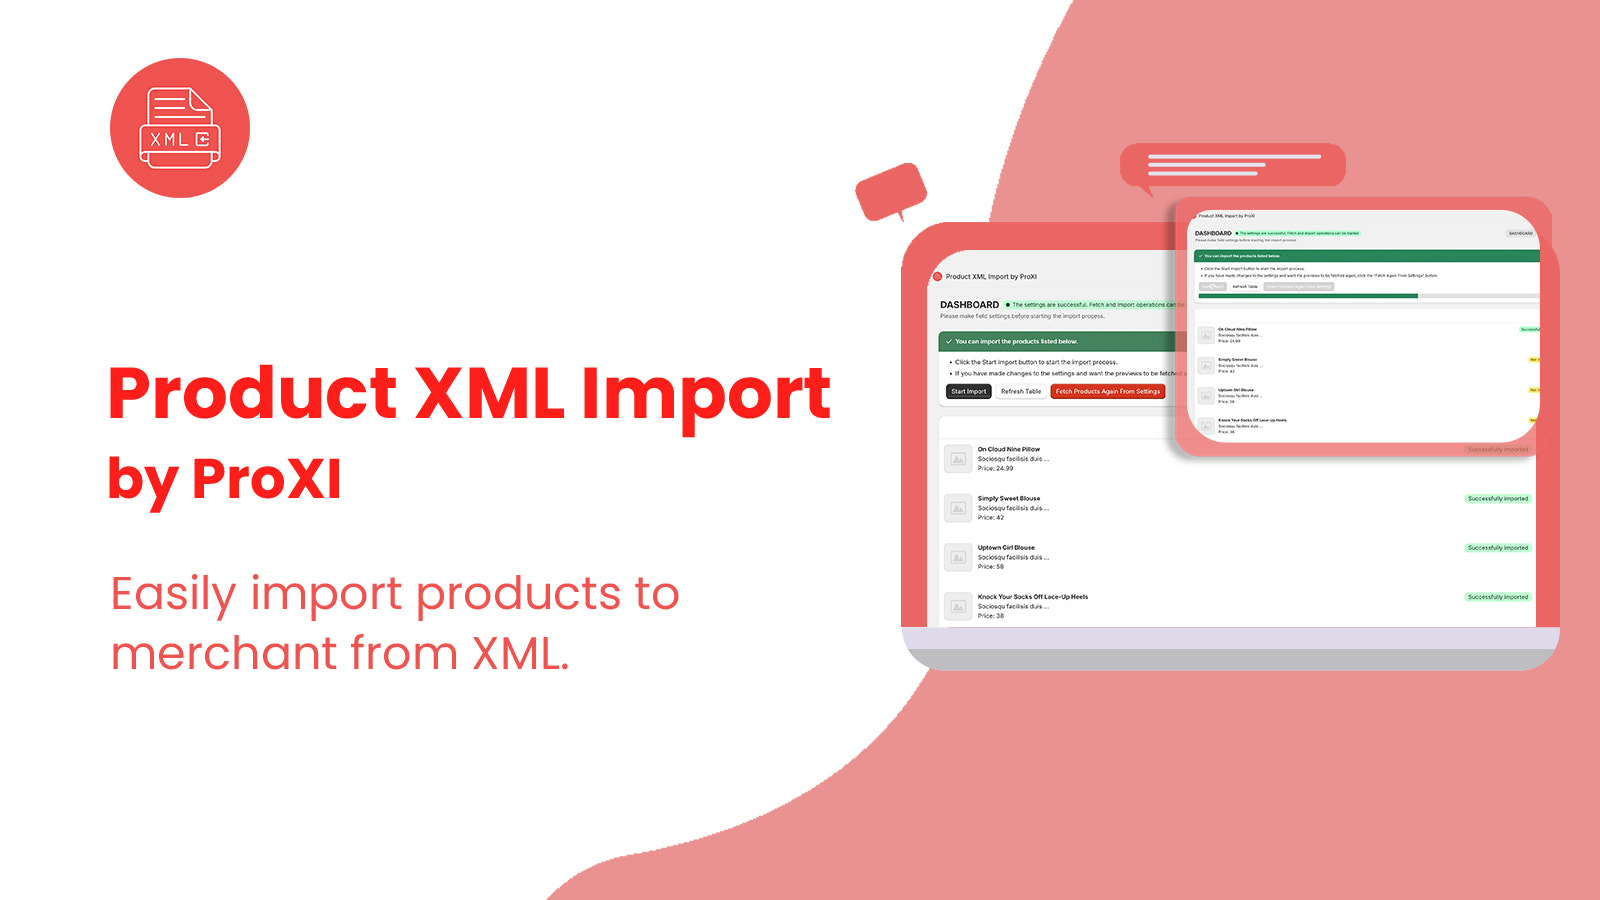 Product XML Import by ProXI: Massenproduktimport aus XML-Datei